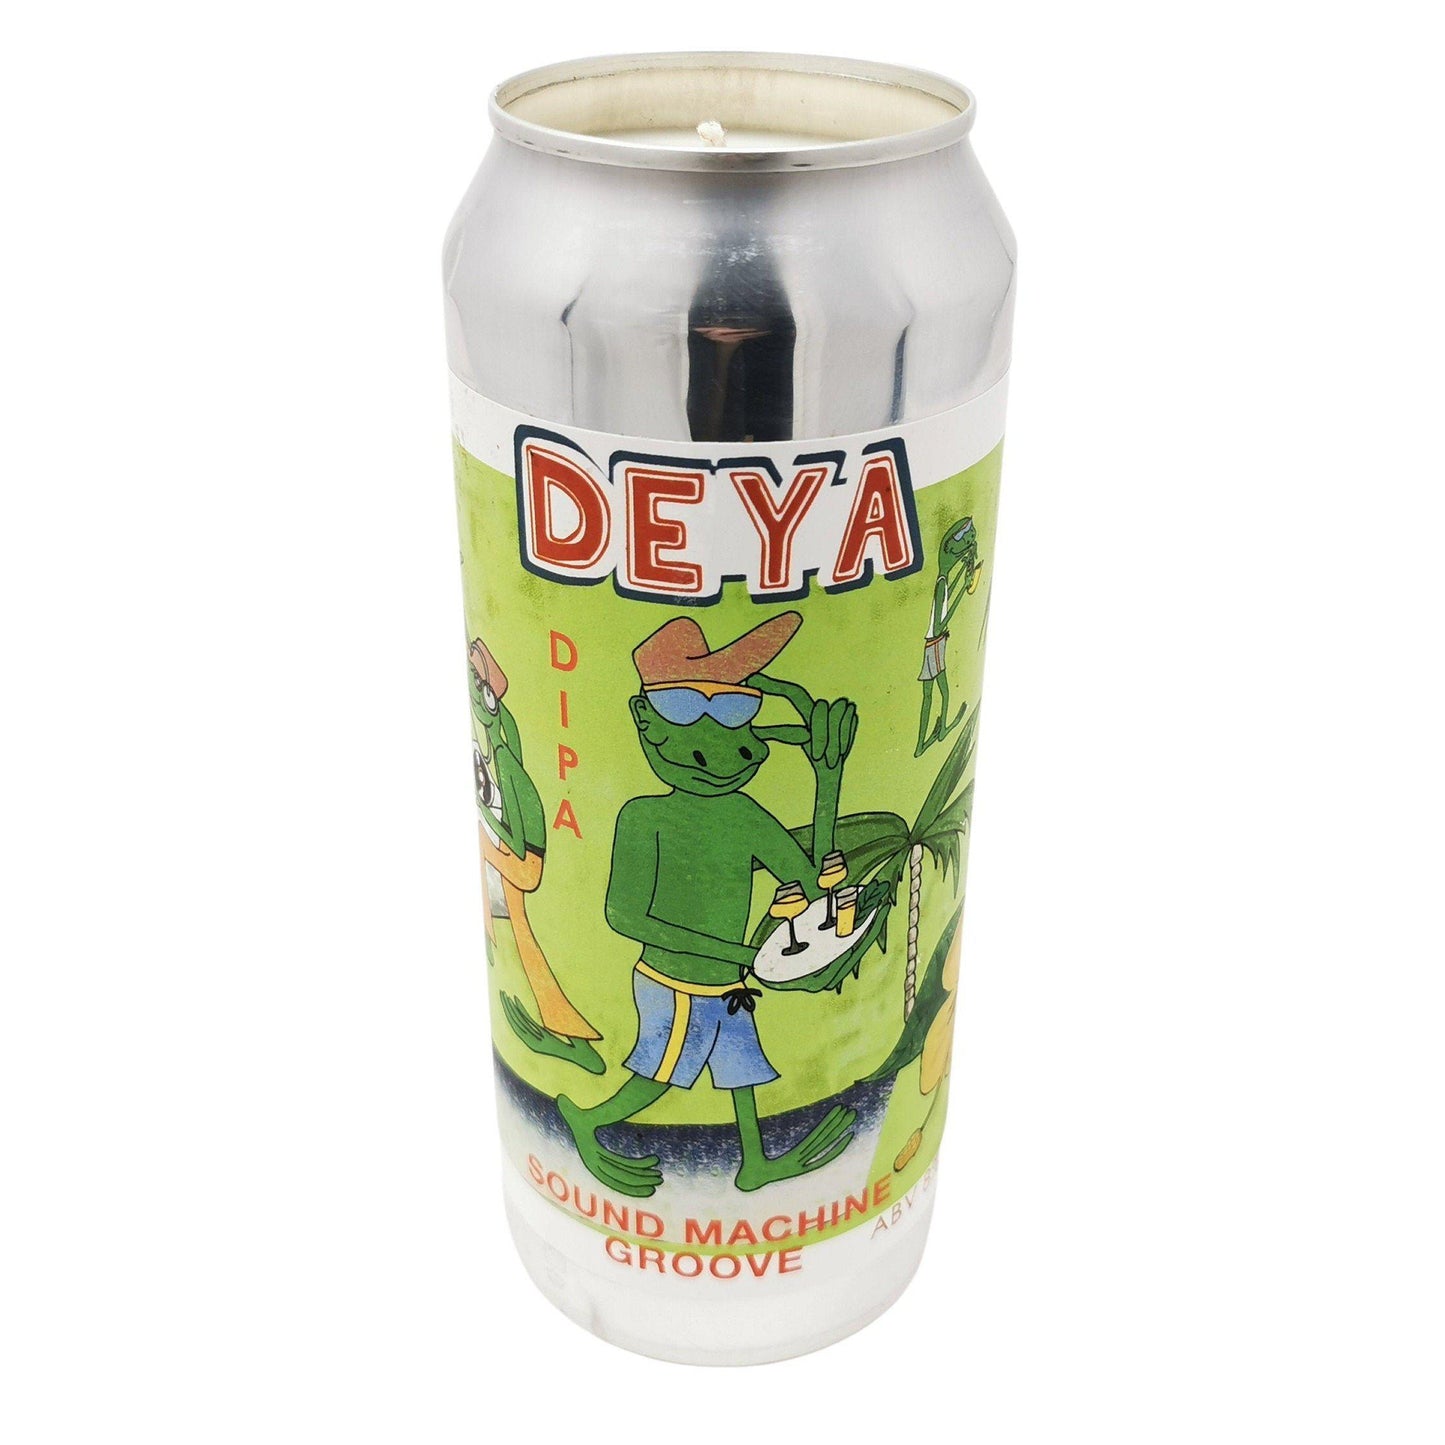 Deya Sound Machine Groove Craft Beer Can Candle Beer Can Candles Adhock Homeware